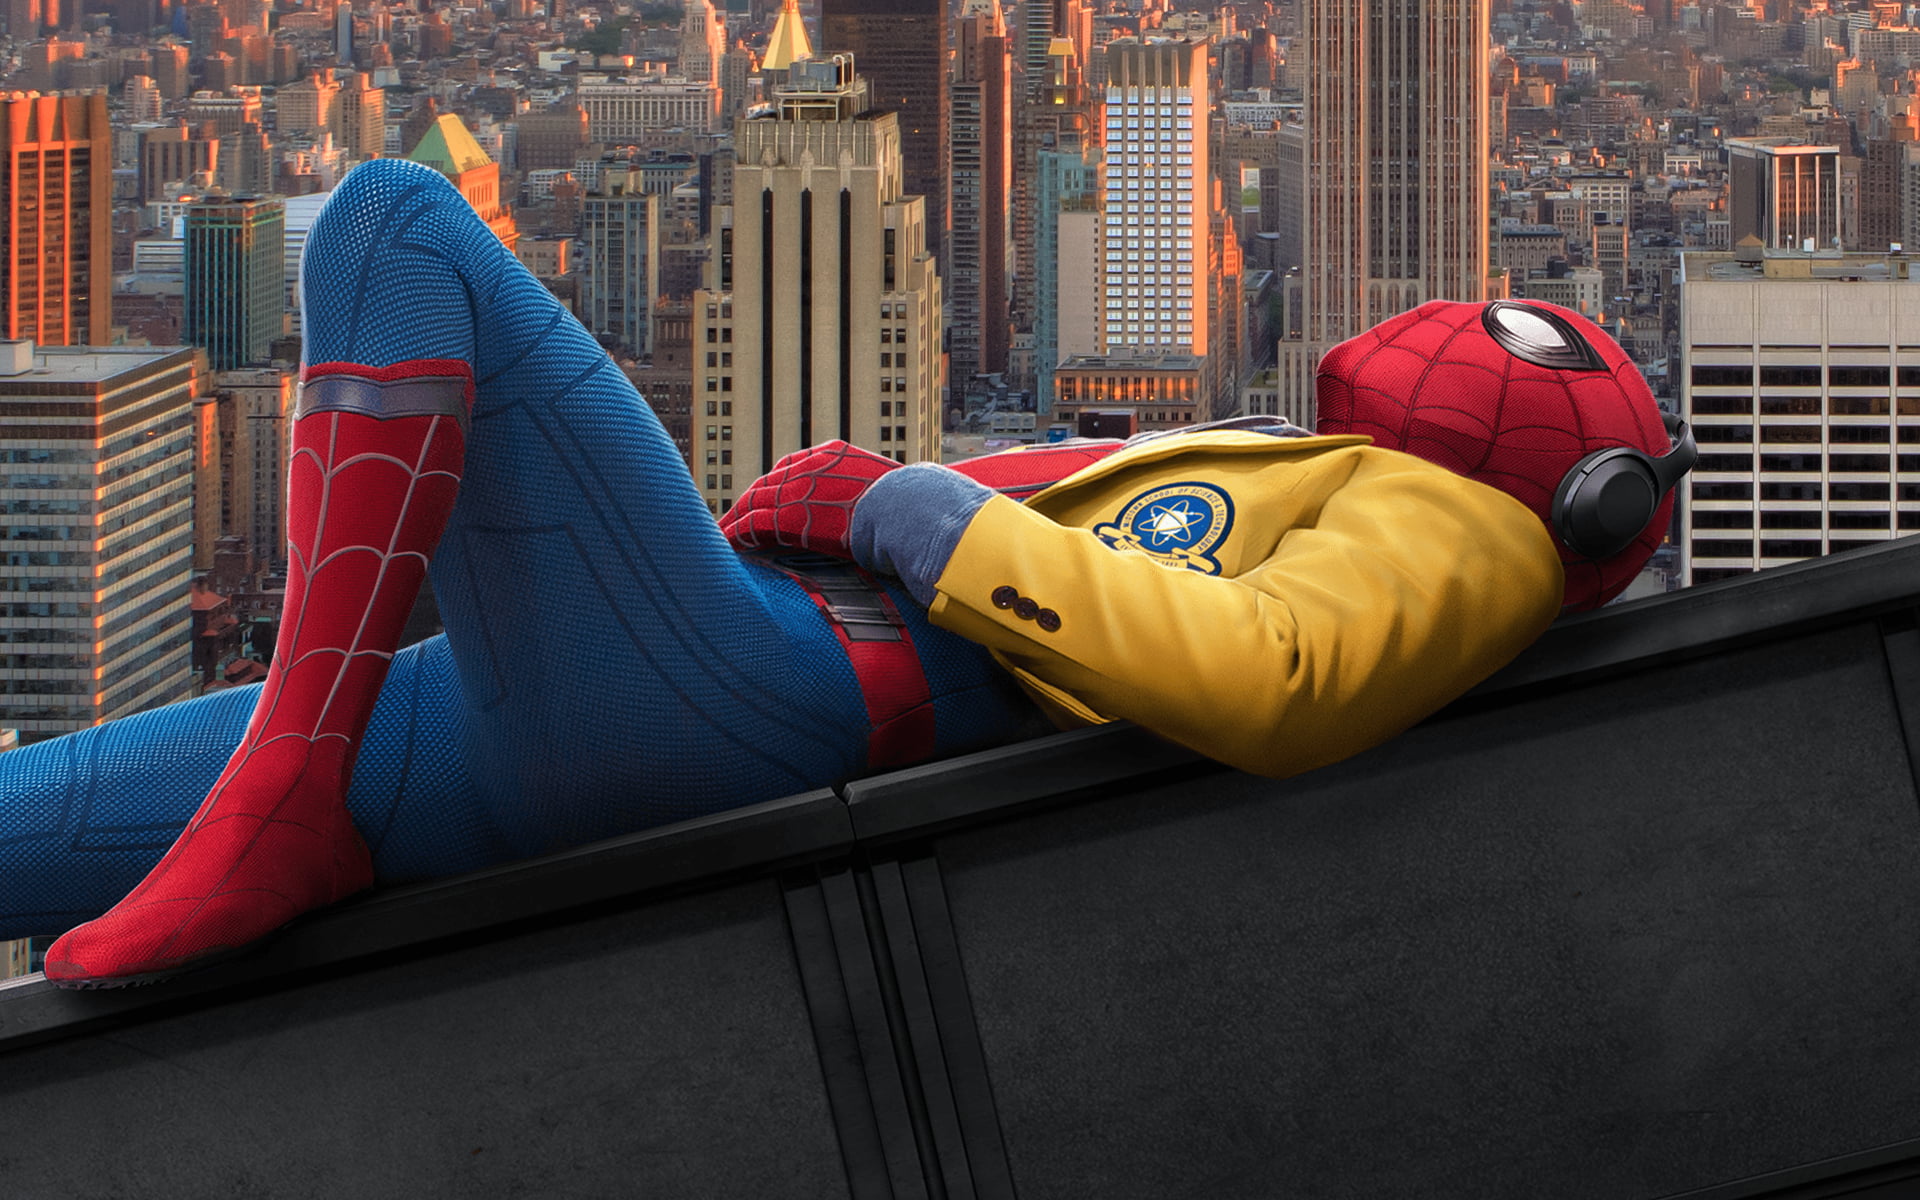 Spider-Man costume, Spider-Man: Homecoming (2017), Marvel Cinematic Universe, movies, Spider-Man